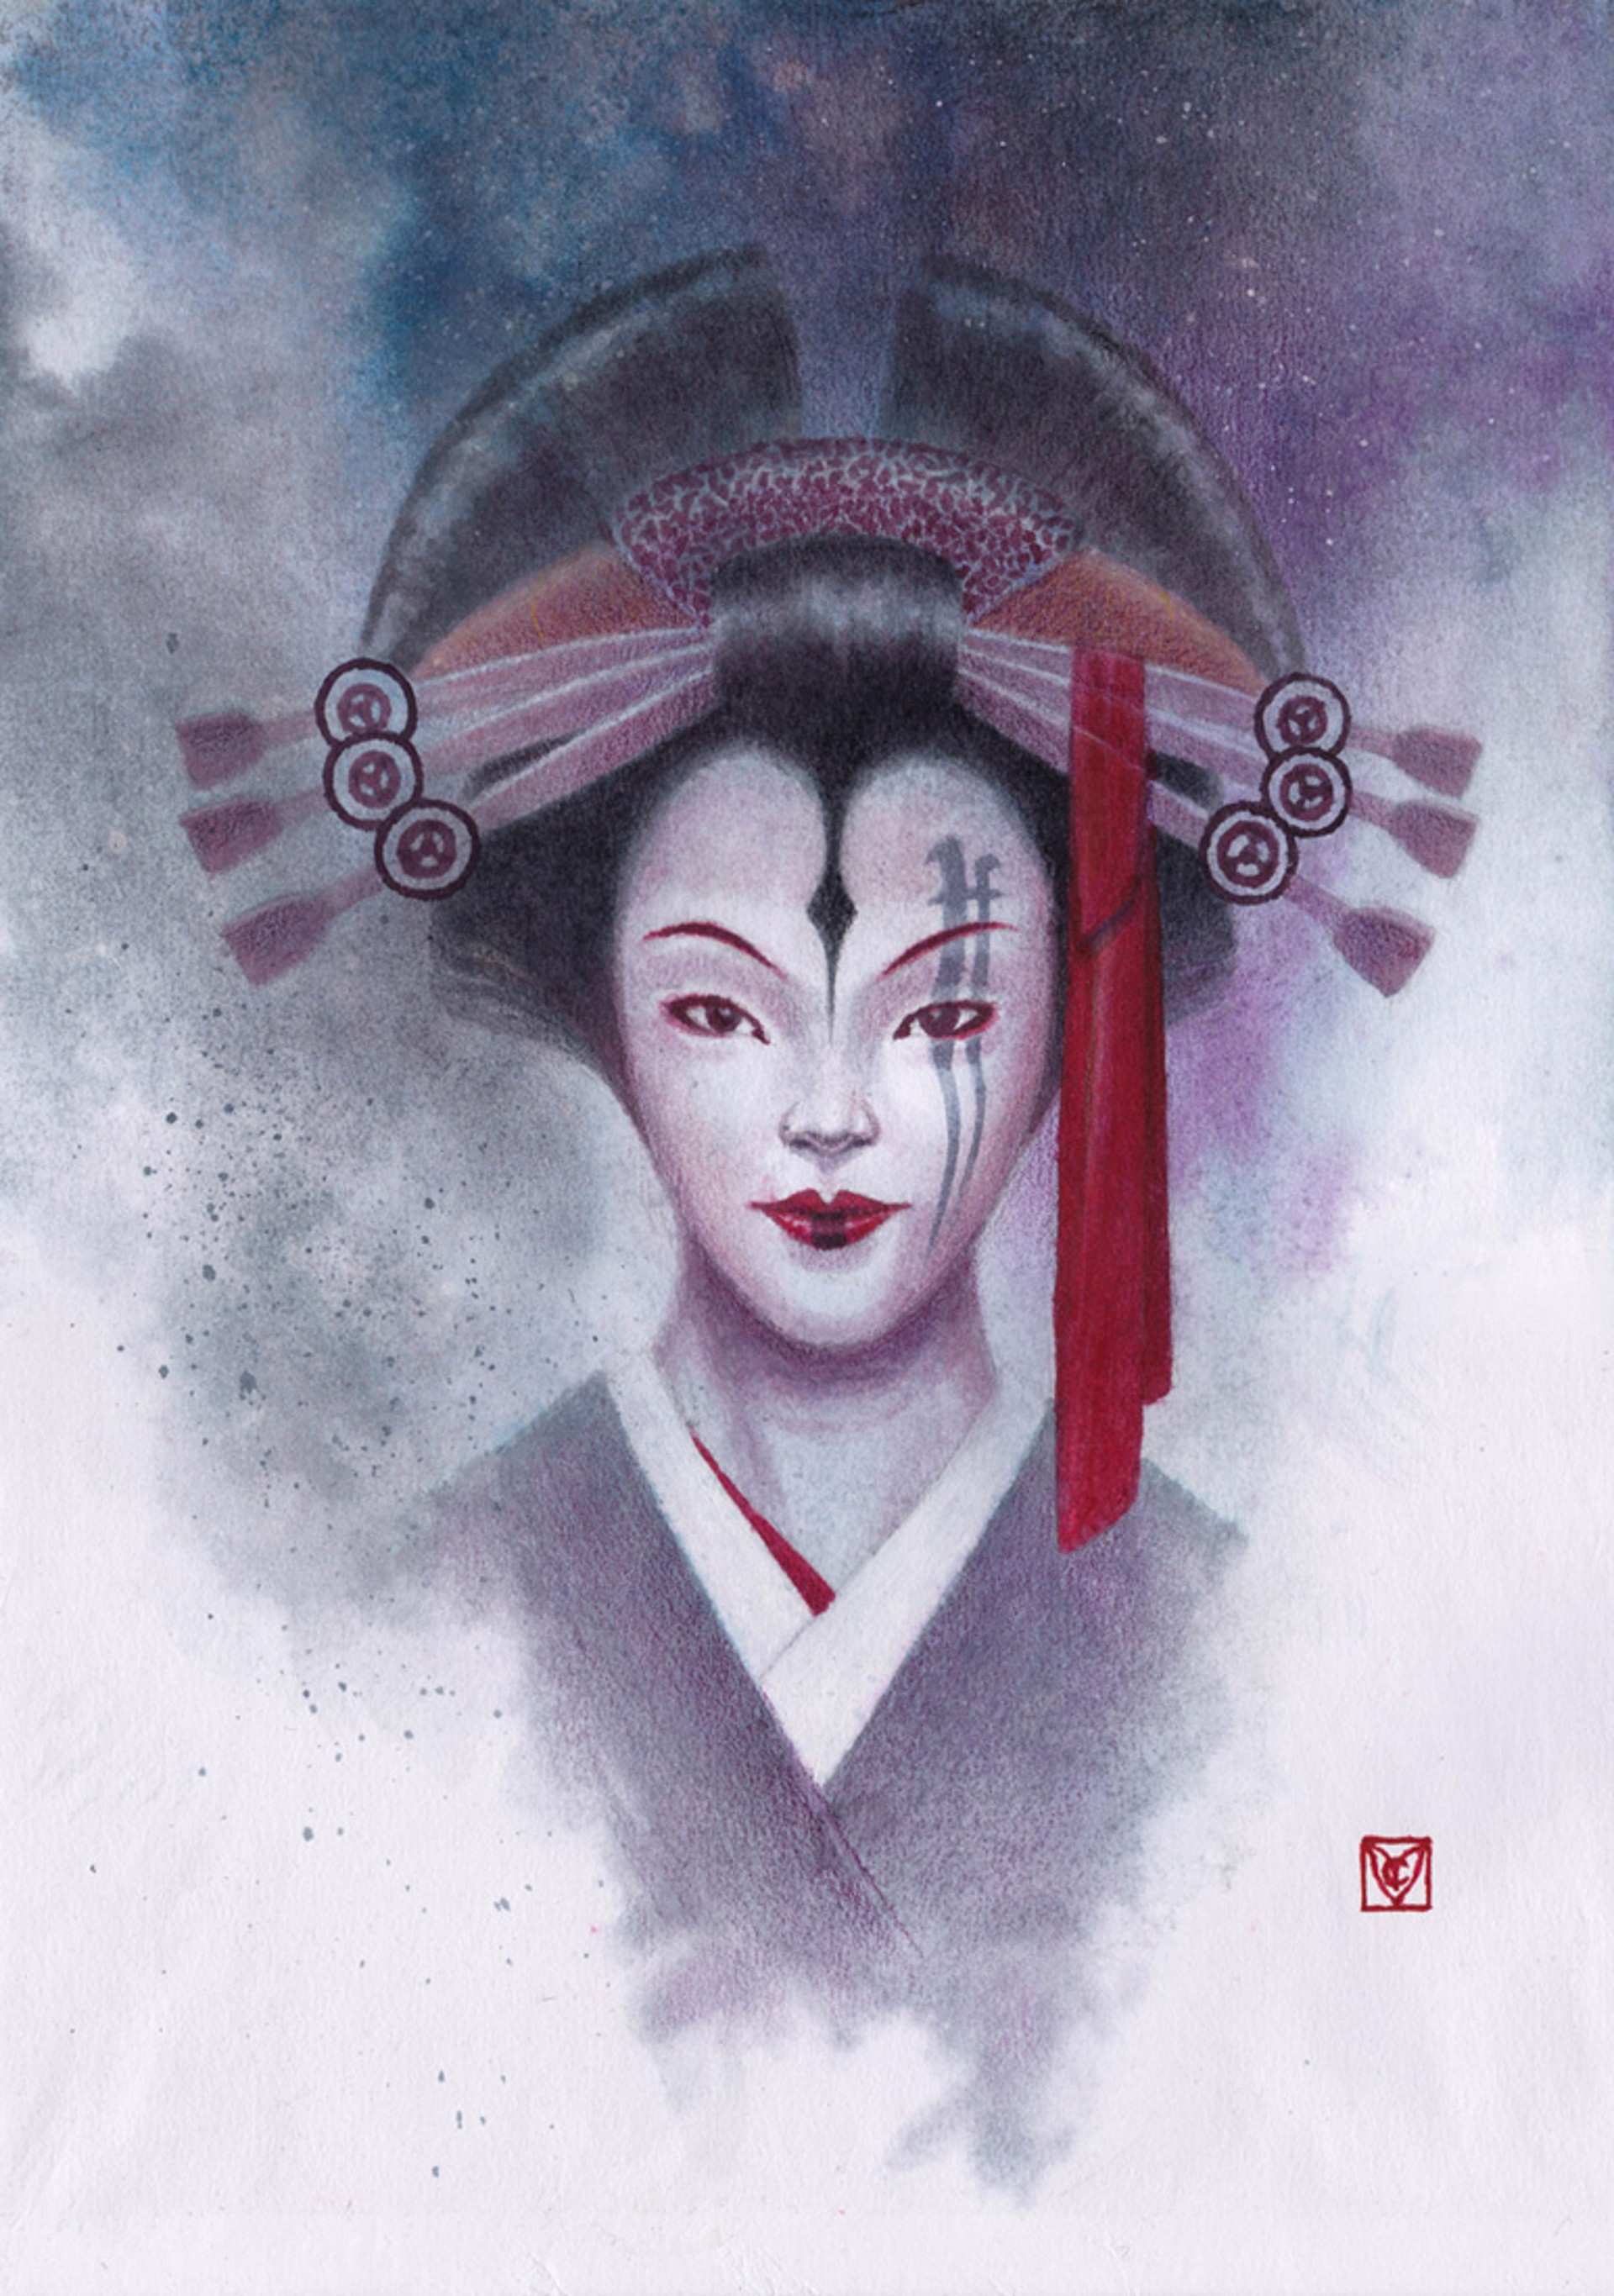 Kabuki: The White Widow by Christophe Vacher